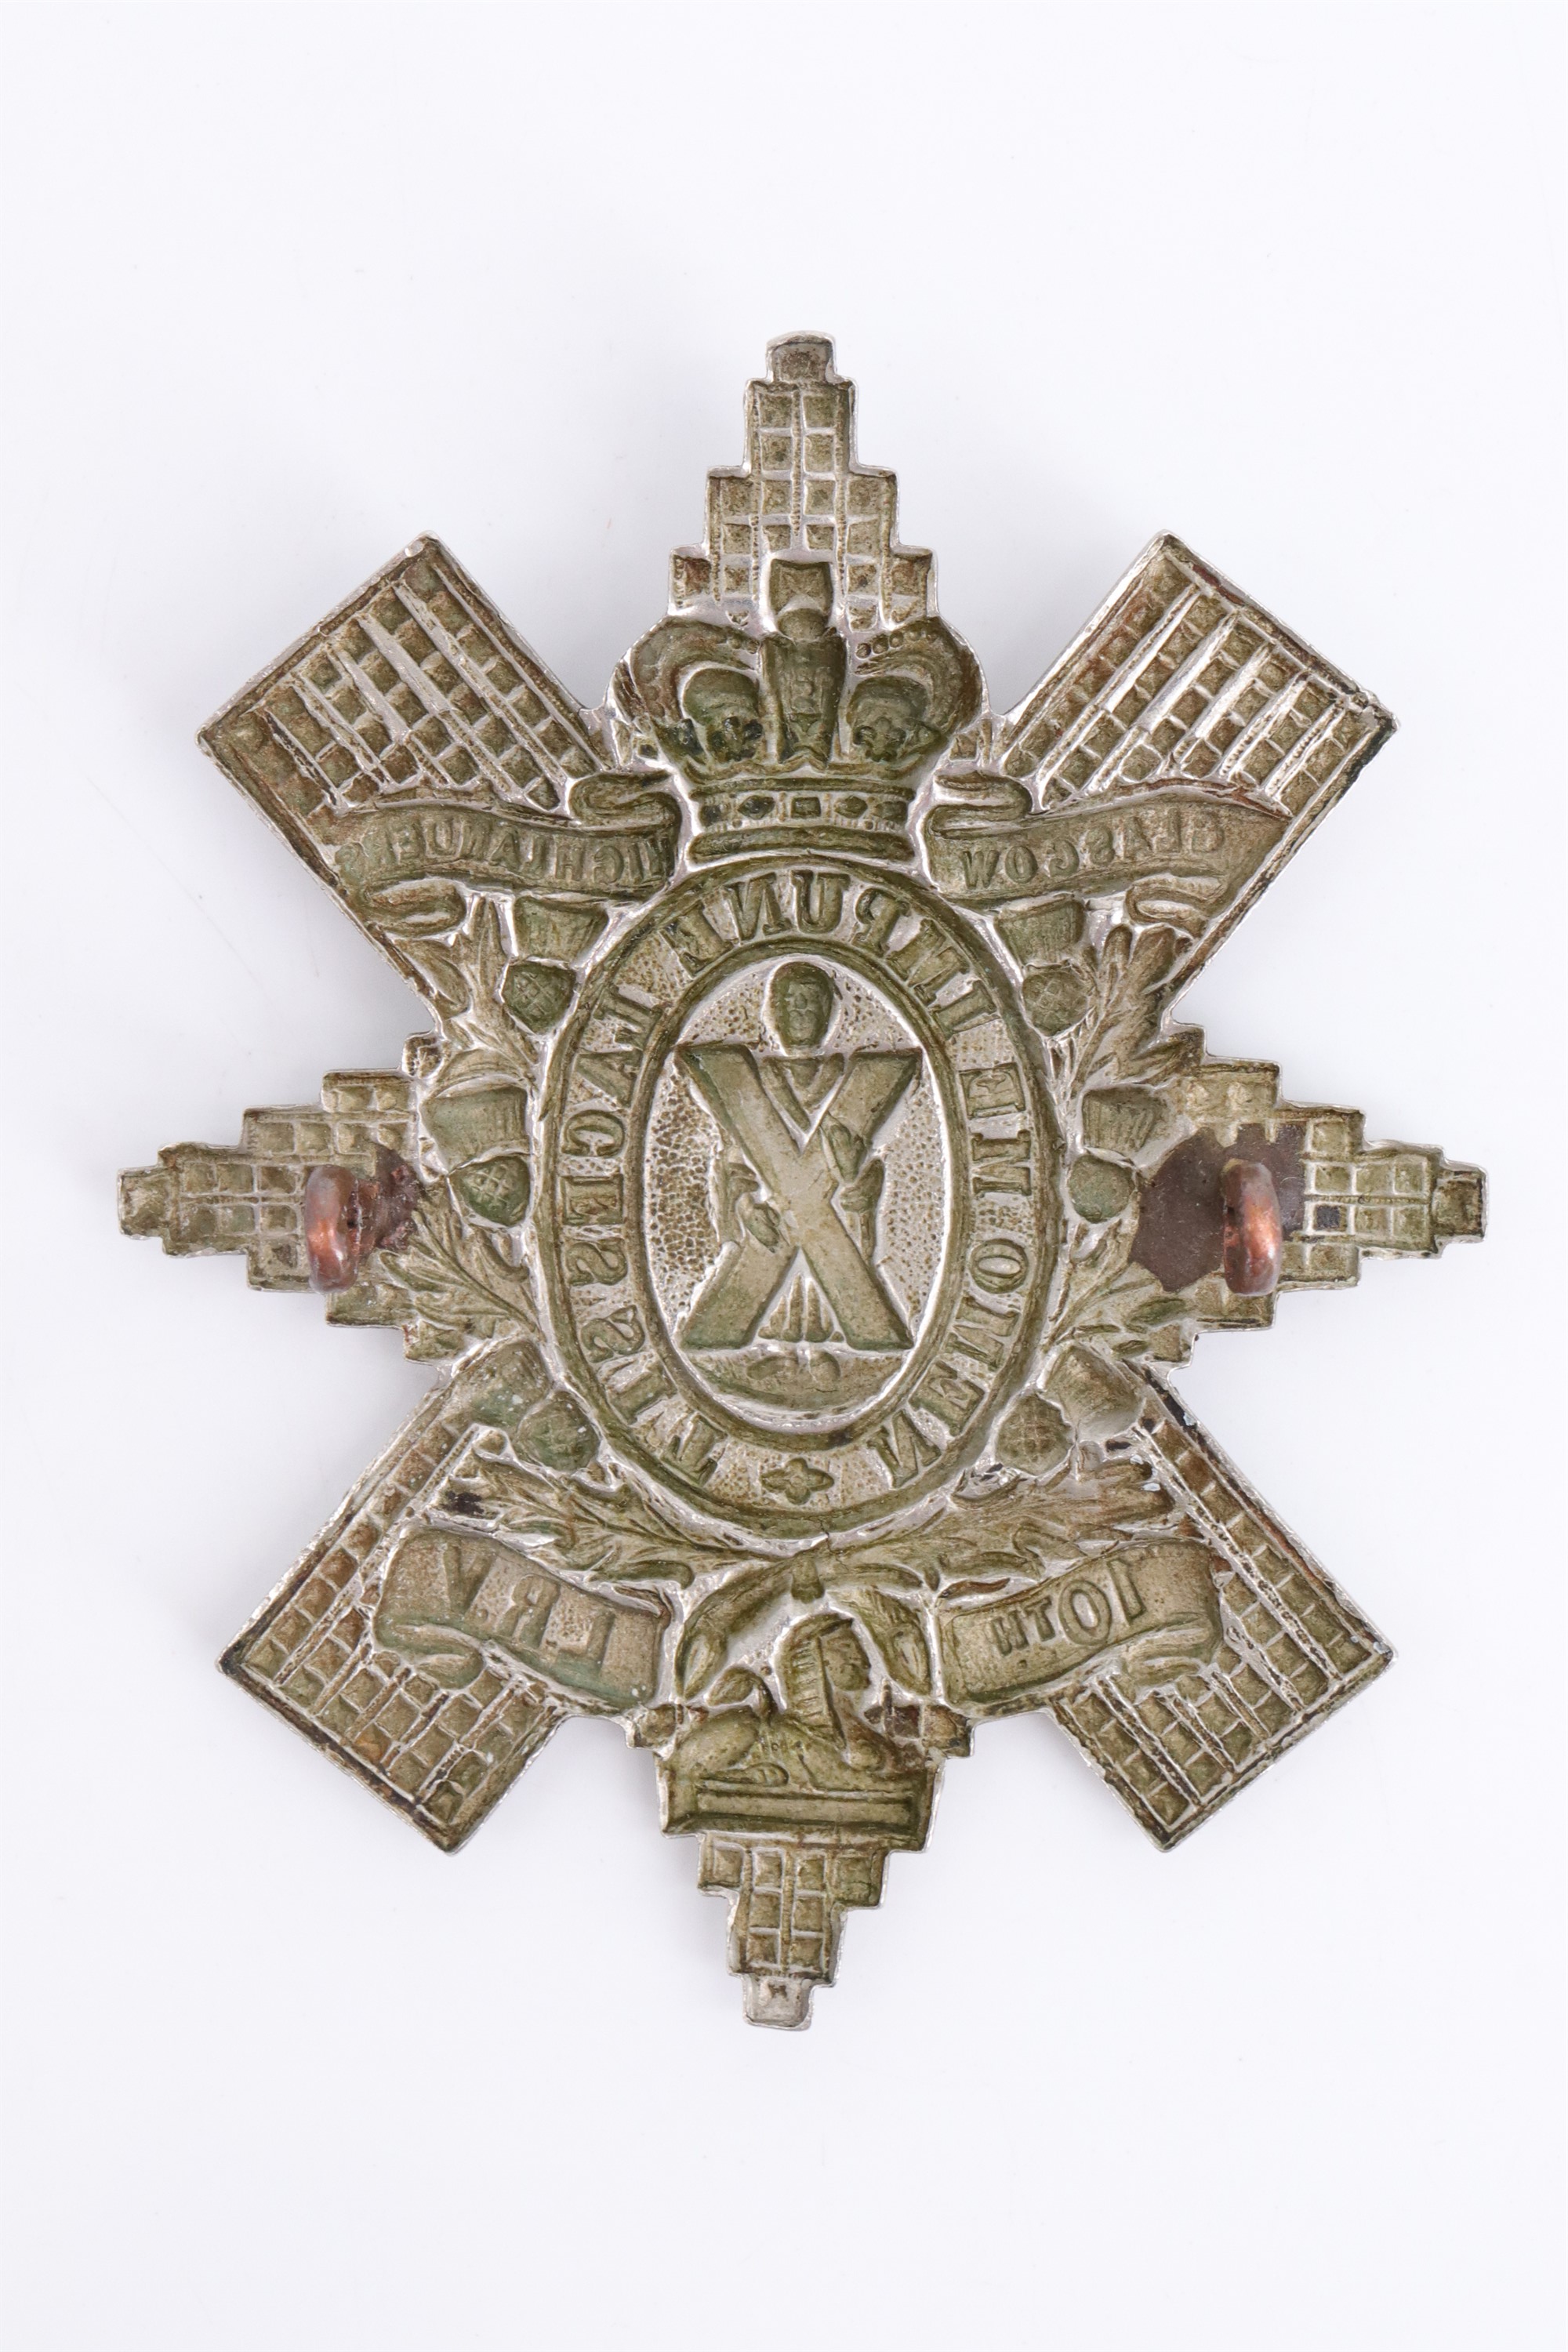 A Victorian 10th Lanarkshire Rifle Volunteers cap badge - Image 2 of 2